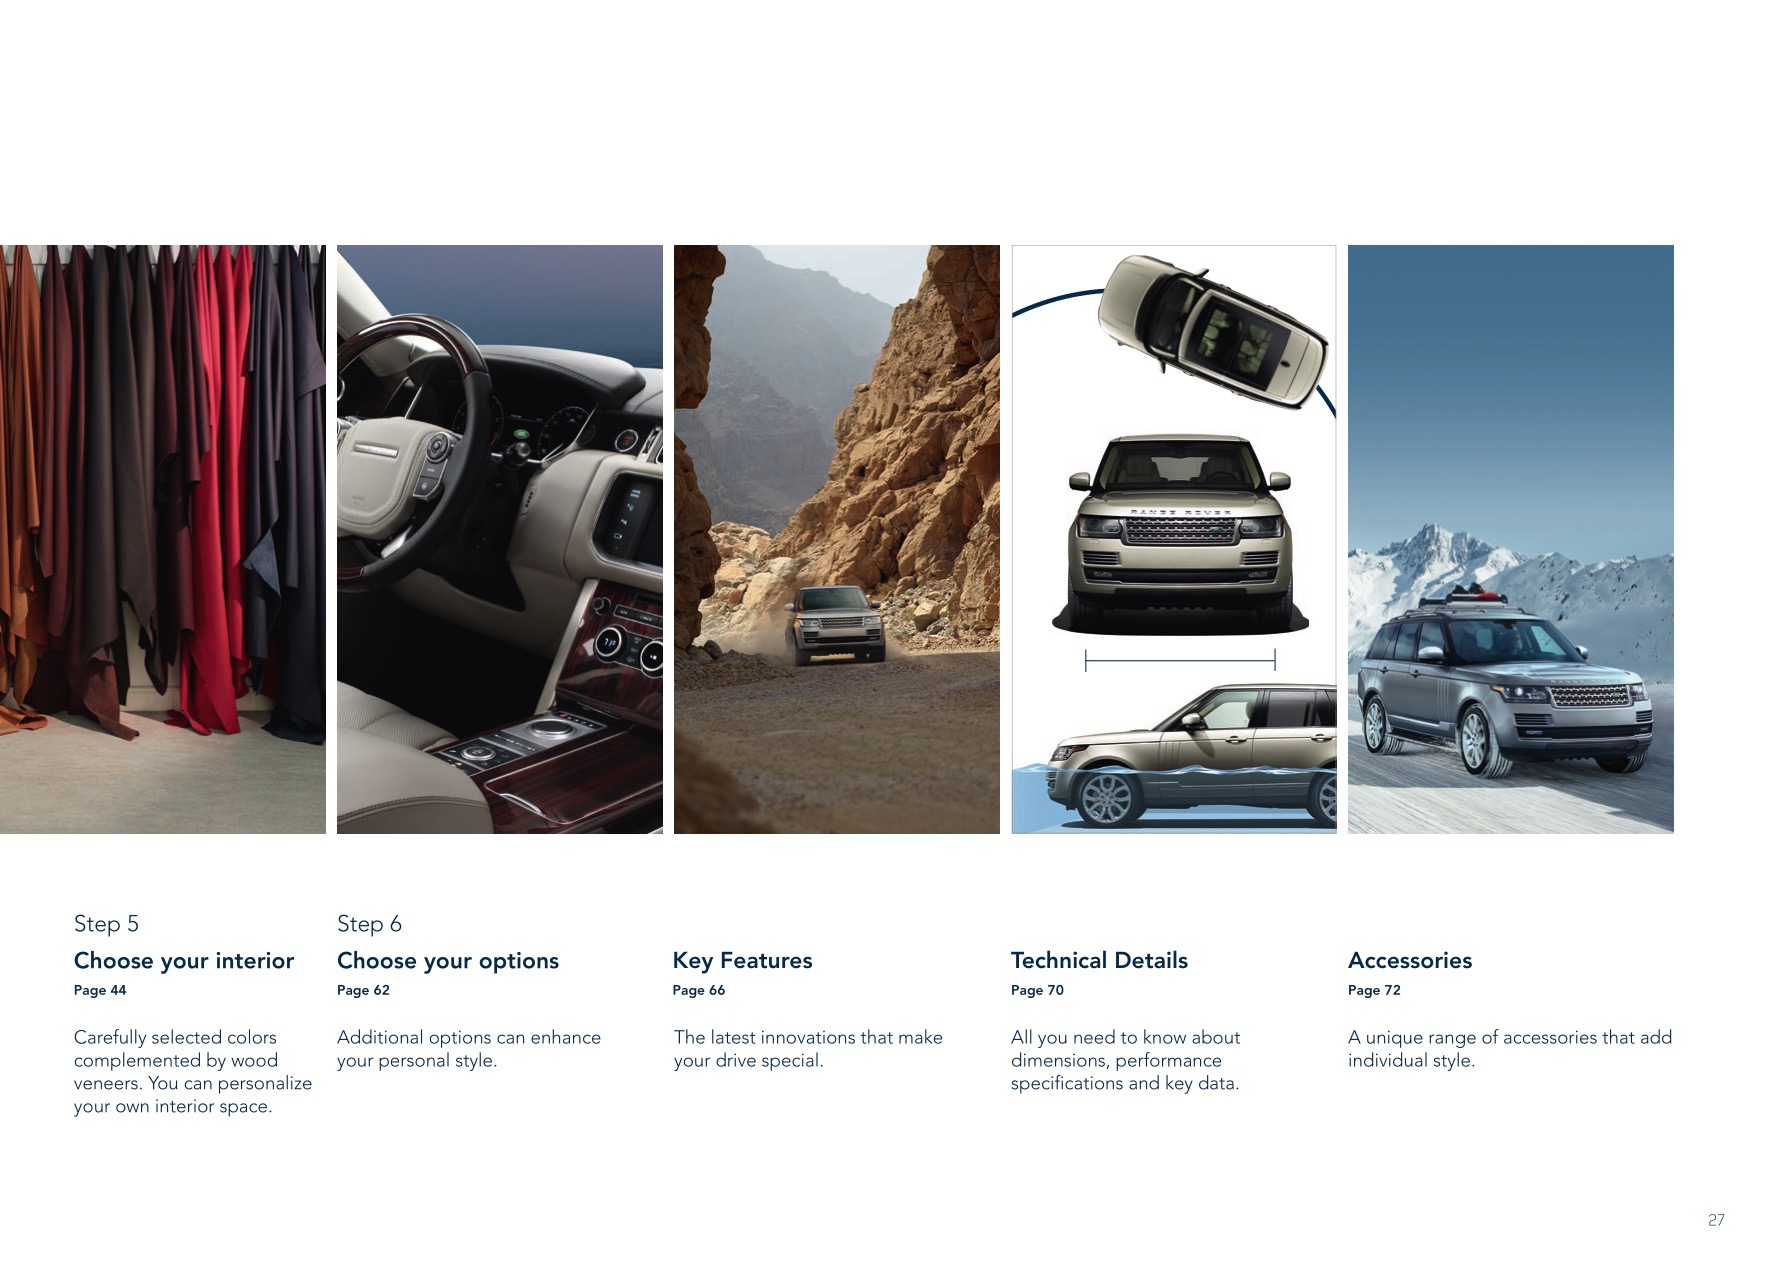 2014 Range Rover Brochure Page 74